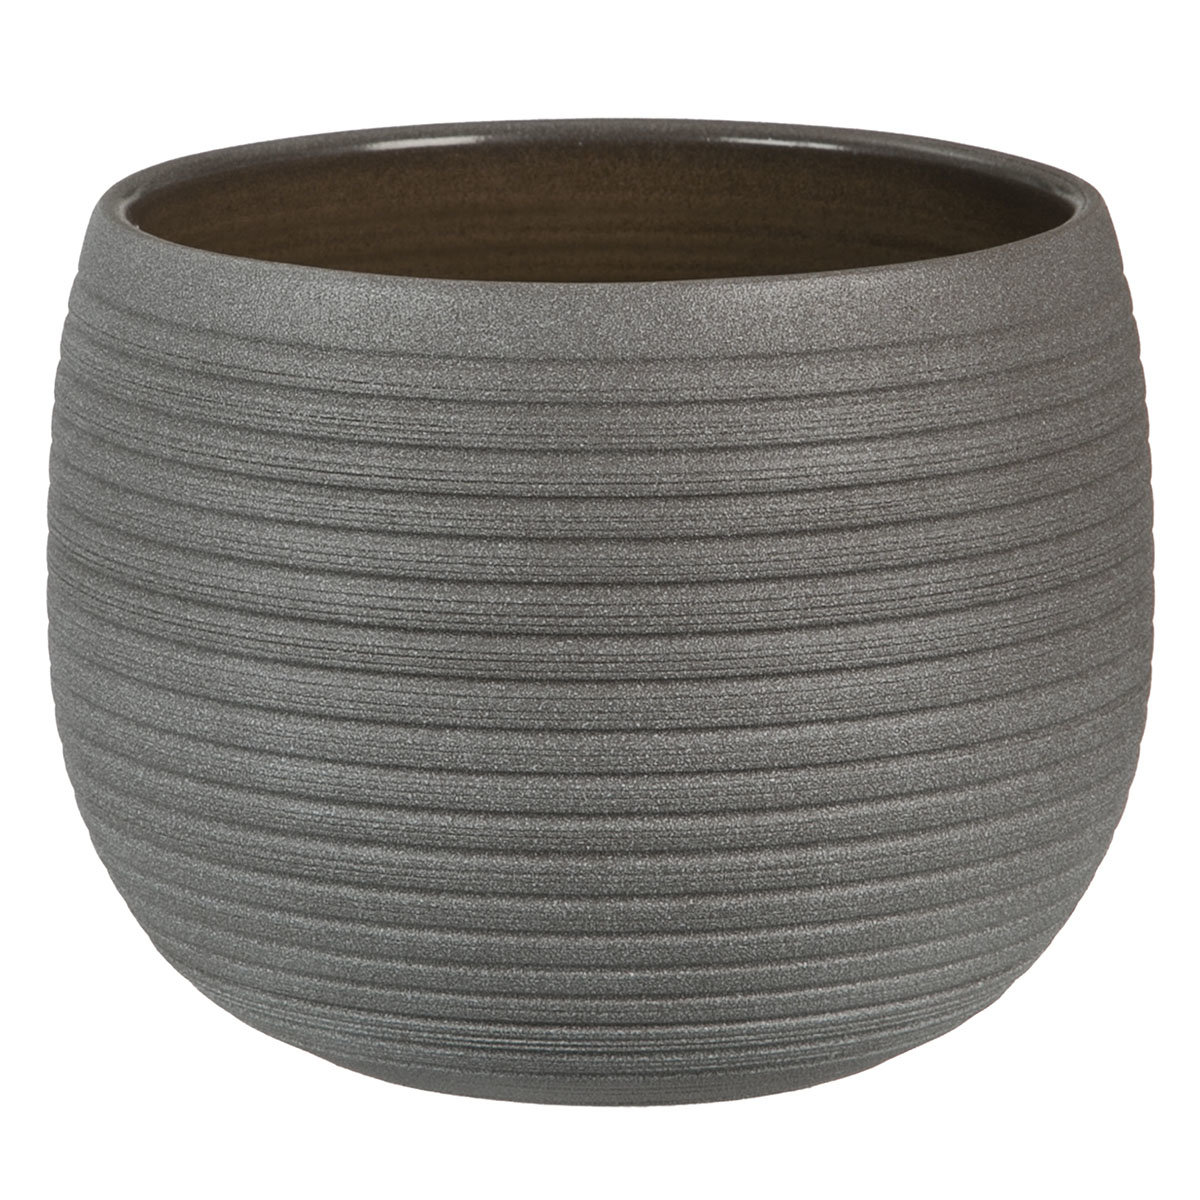 Keramik-Übertopf, rund, 15,5x21x21 cm, Umber Stone
